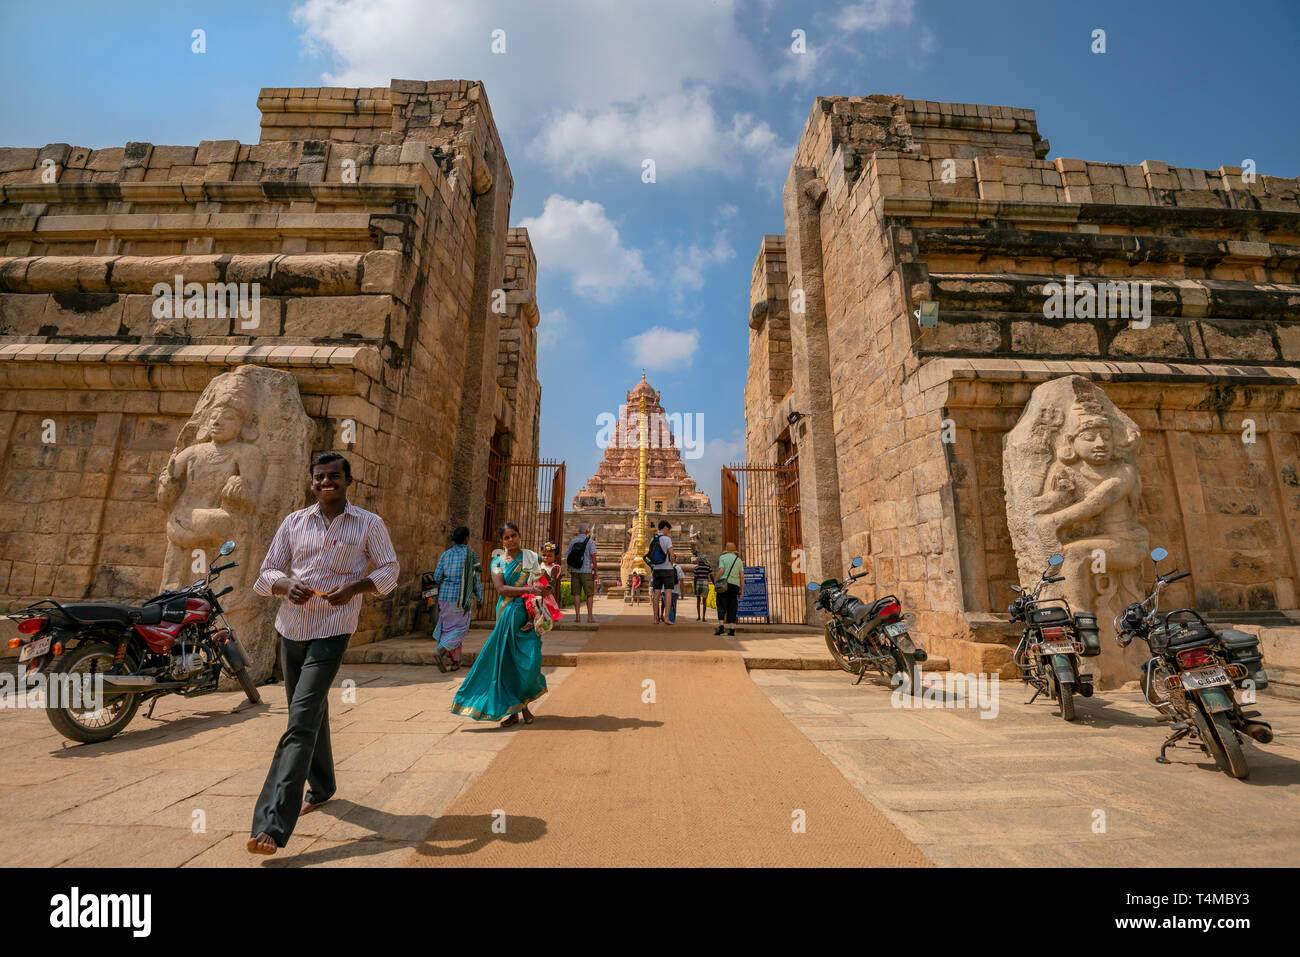 Horizontale Ansicht von Touristen am Tempel in Gangaikonda Cholapuram Brihadishvara, Indien. Stockfoto